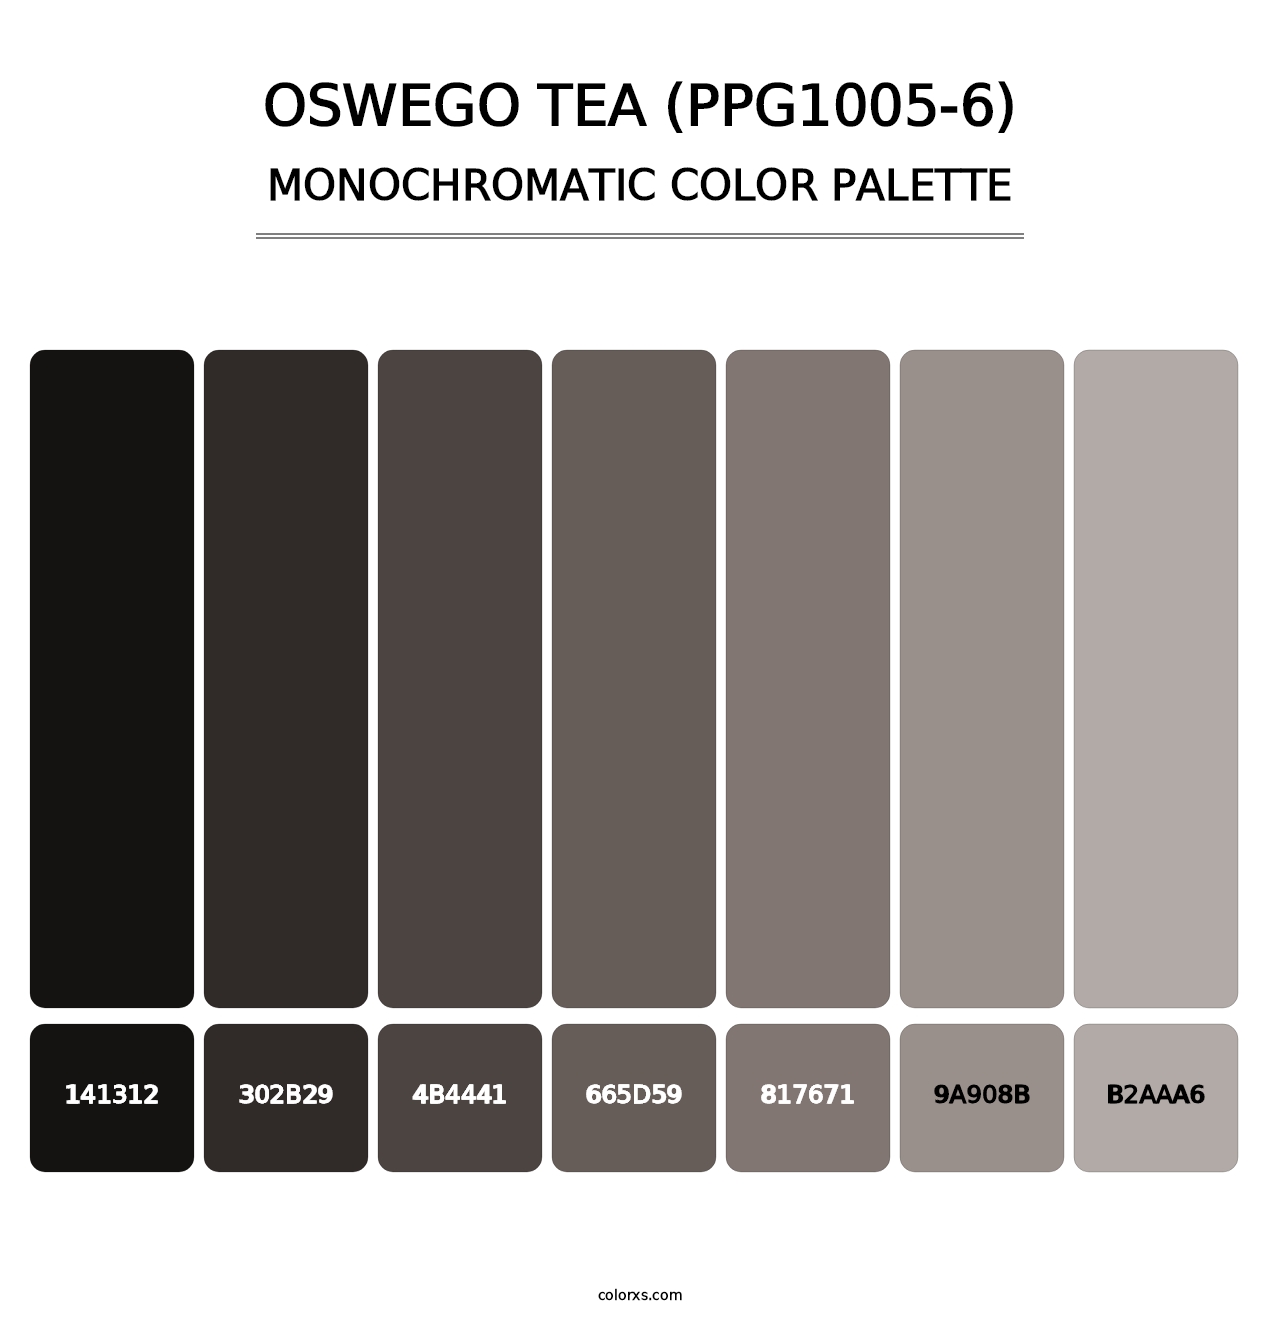 Oswego Tea (PPG1005-6) - Monochromatic Color Palette